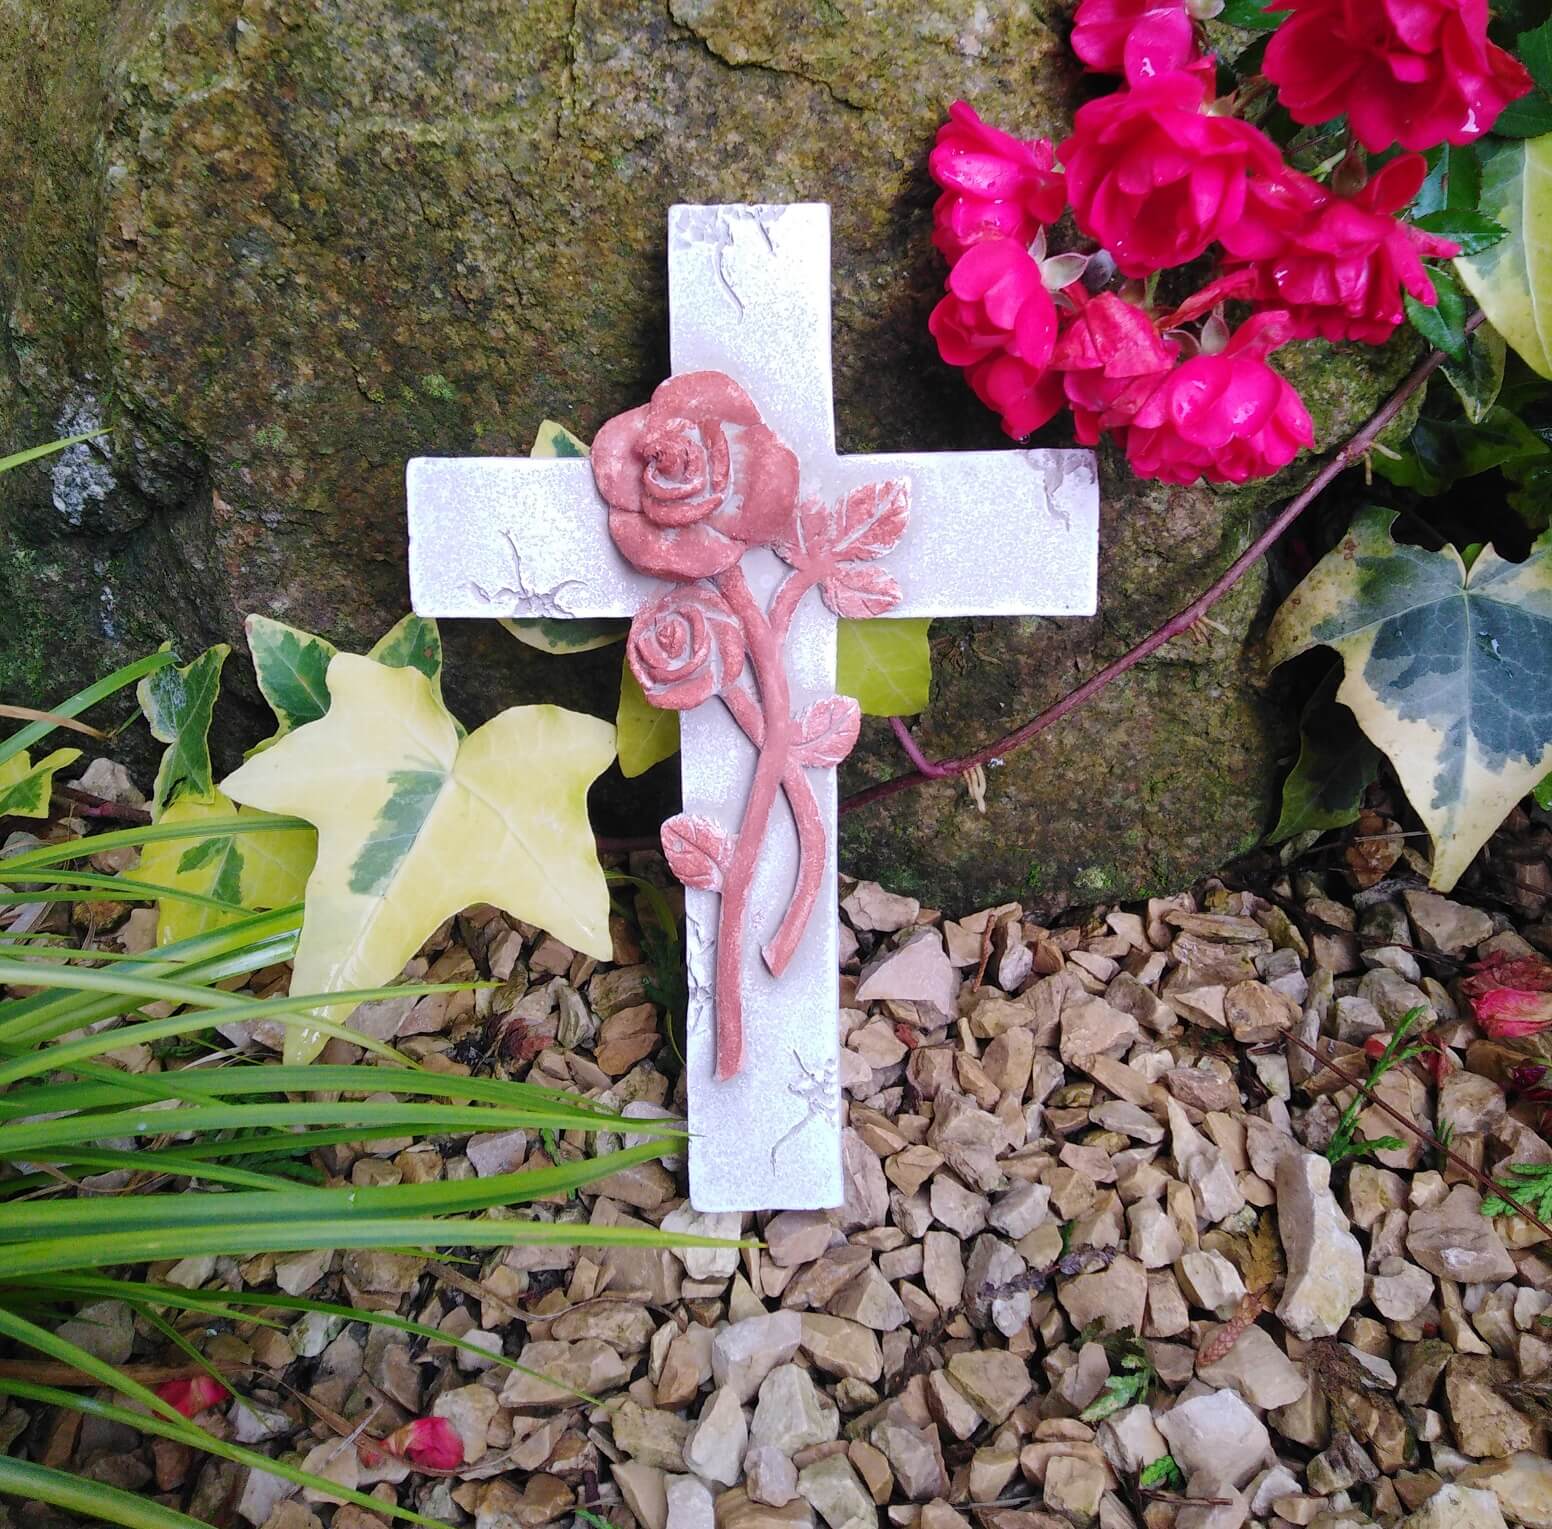 Kreuz mit 3D Rosen Rost Design Grabengel Gedenkstein Grabschmuck Grabdeko